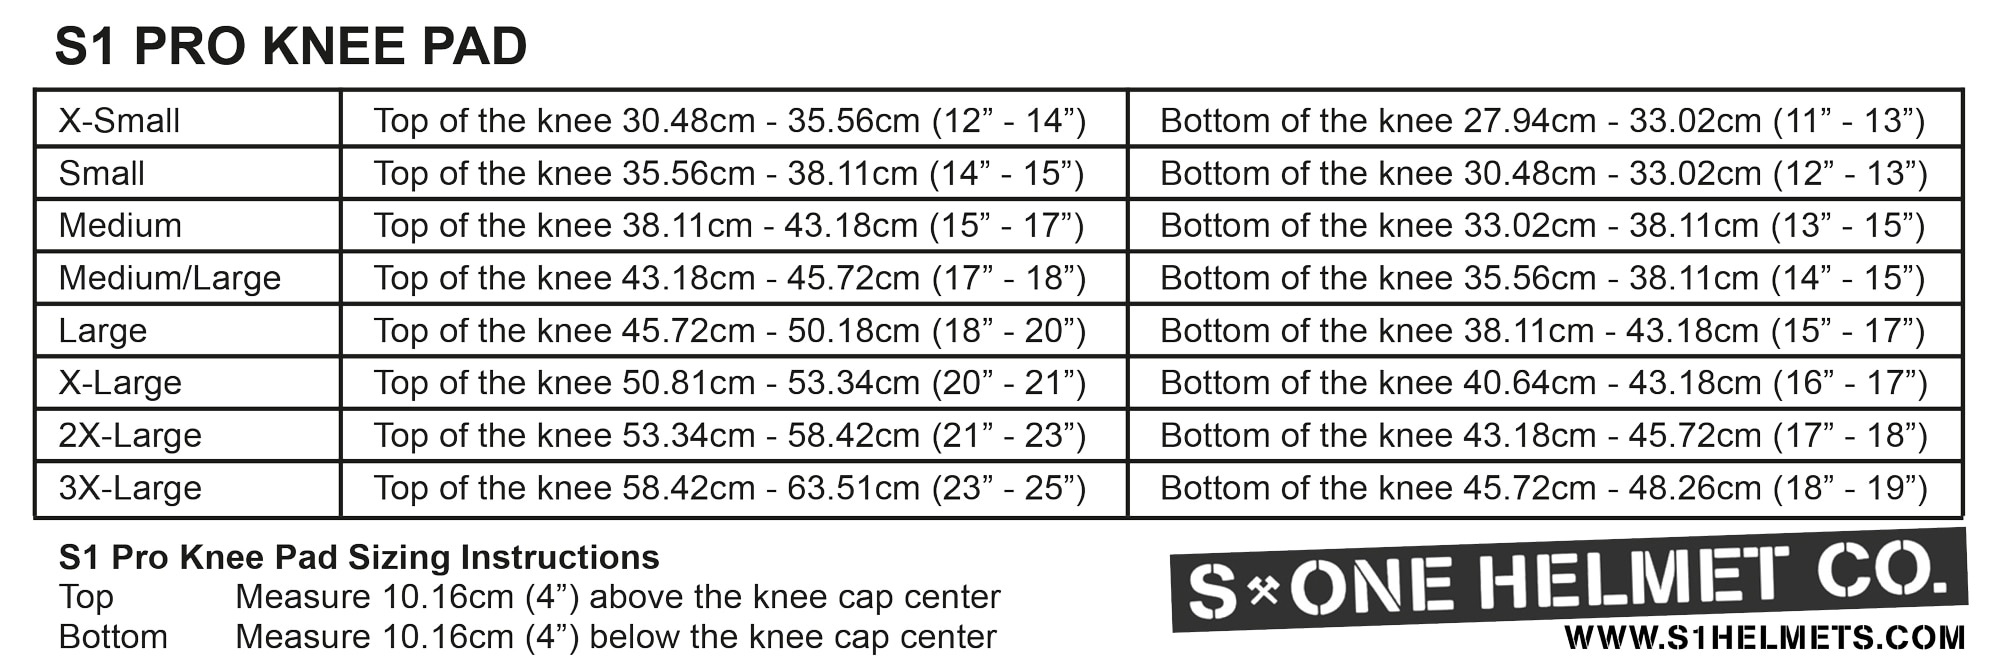 S1 Pro Knee Pad Gen 4 Size Chart